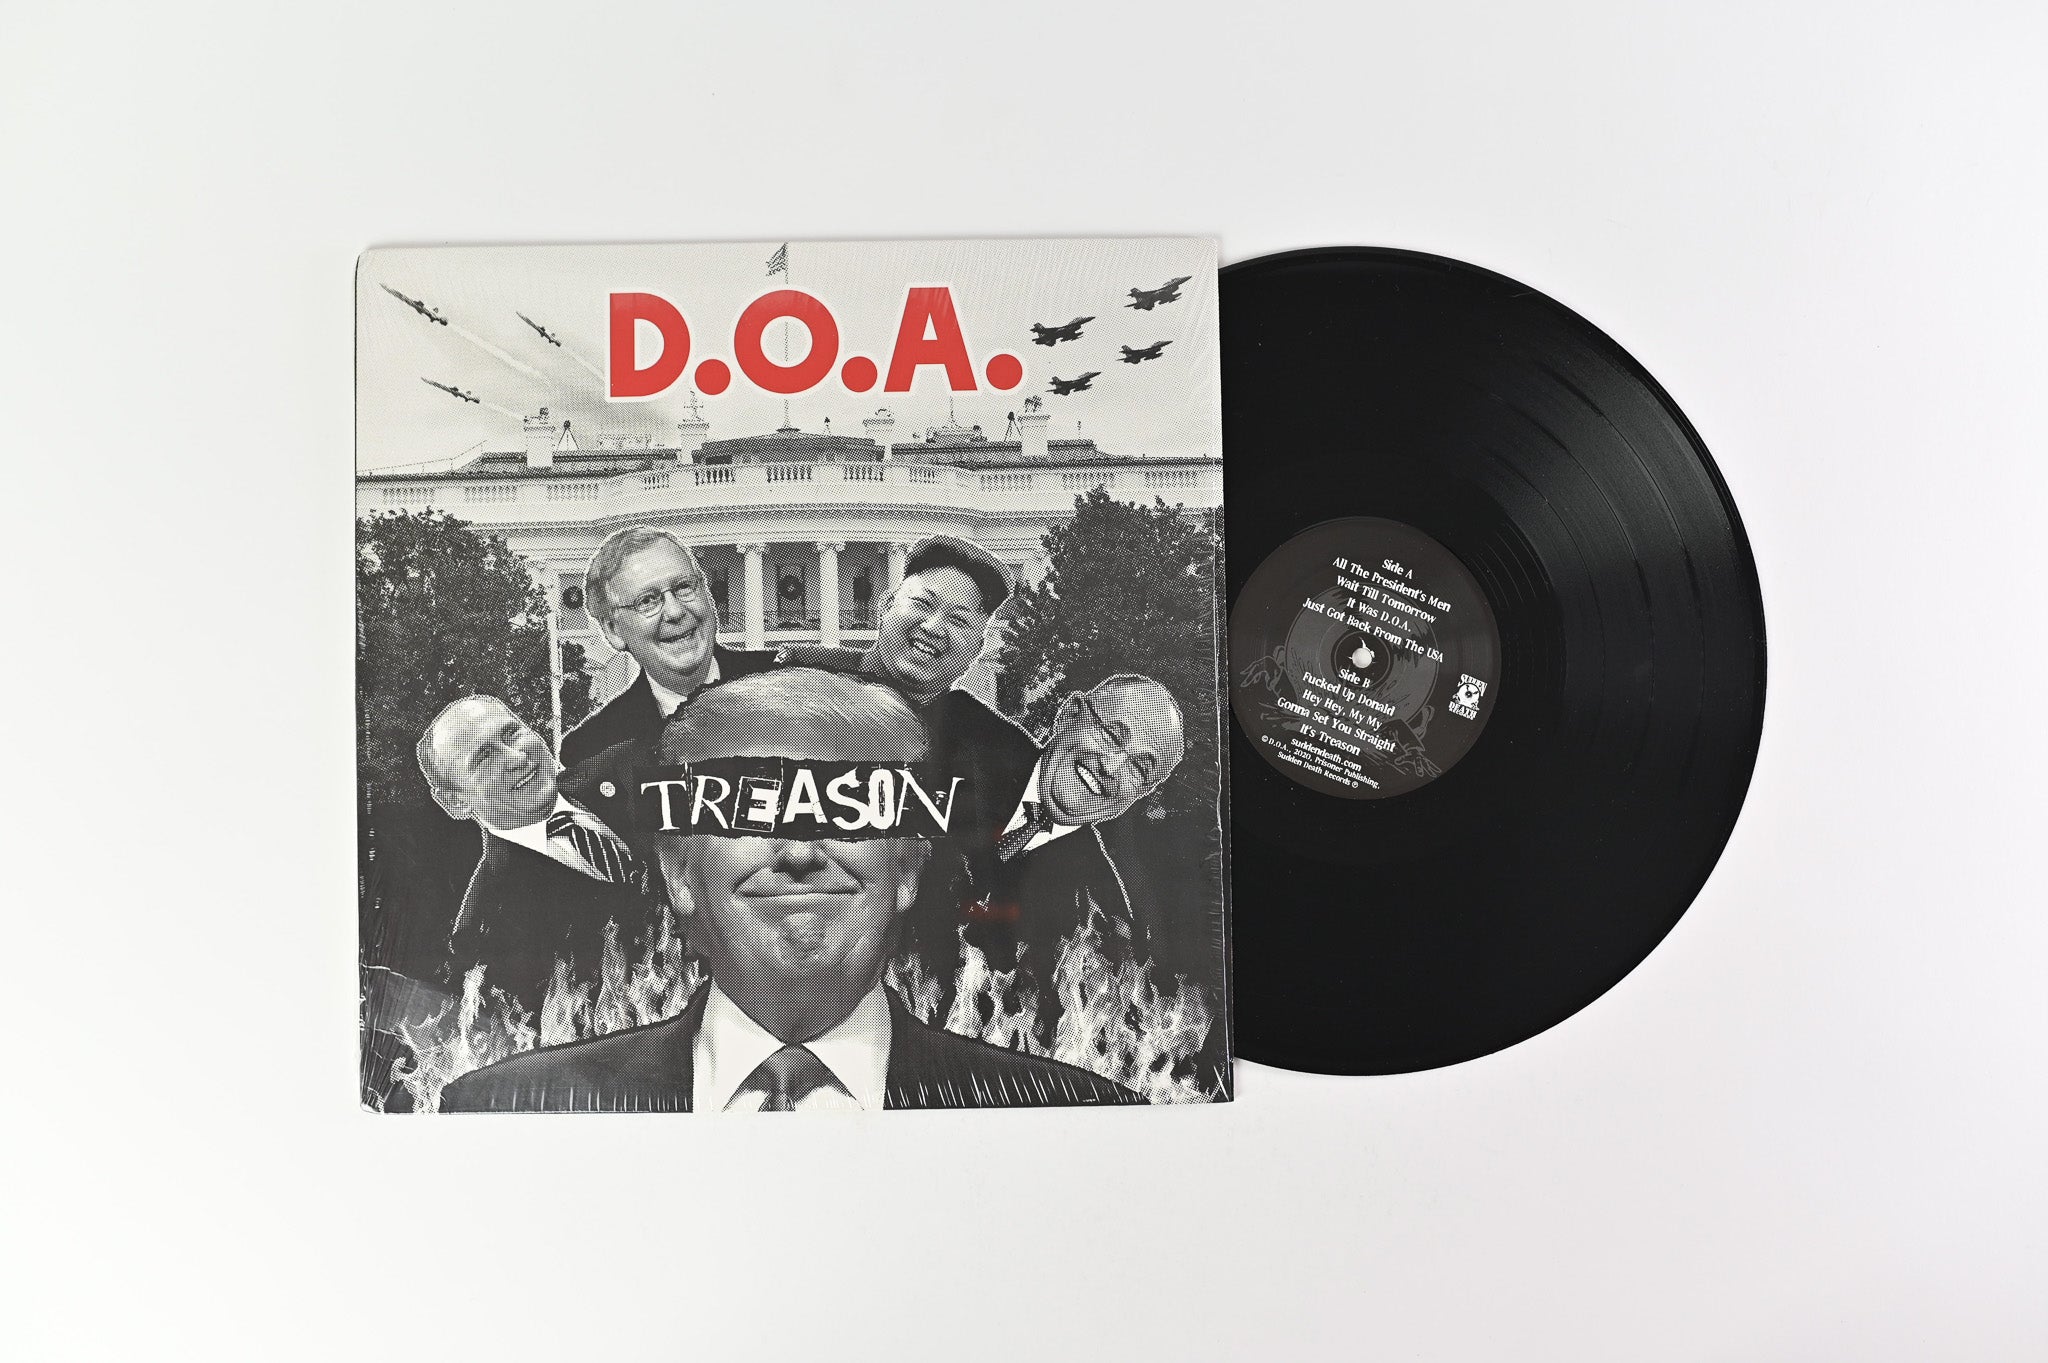 D.O.A. - Treason on Sudden Death Records